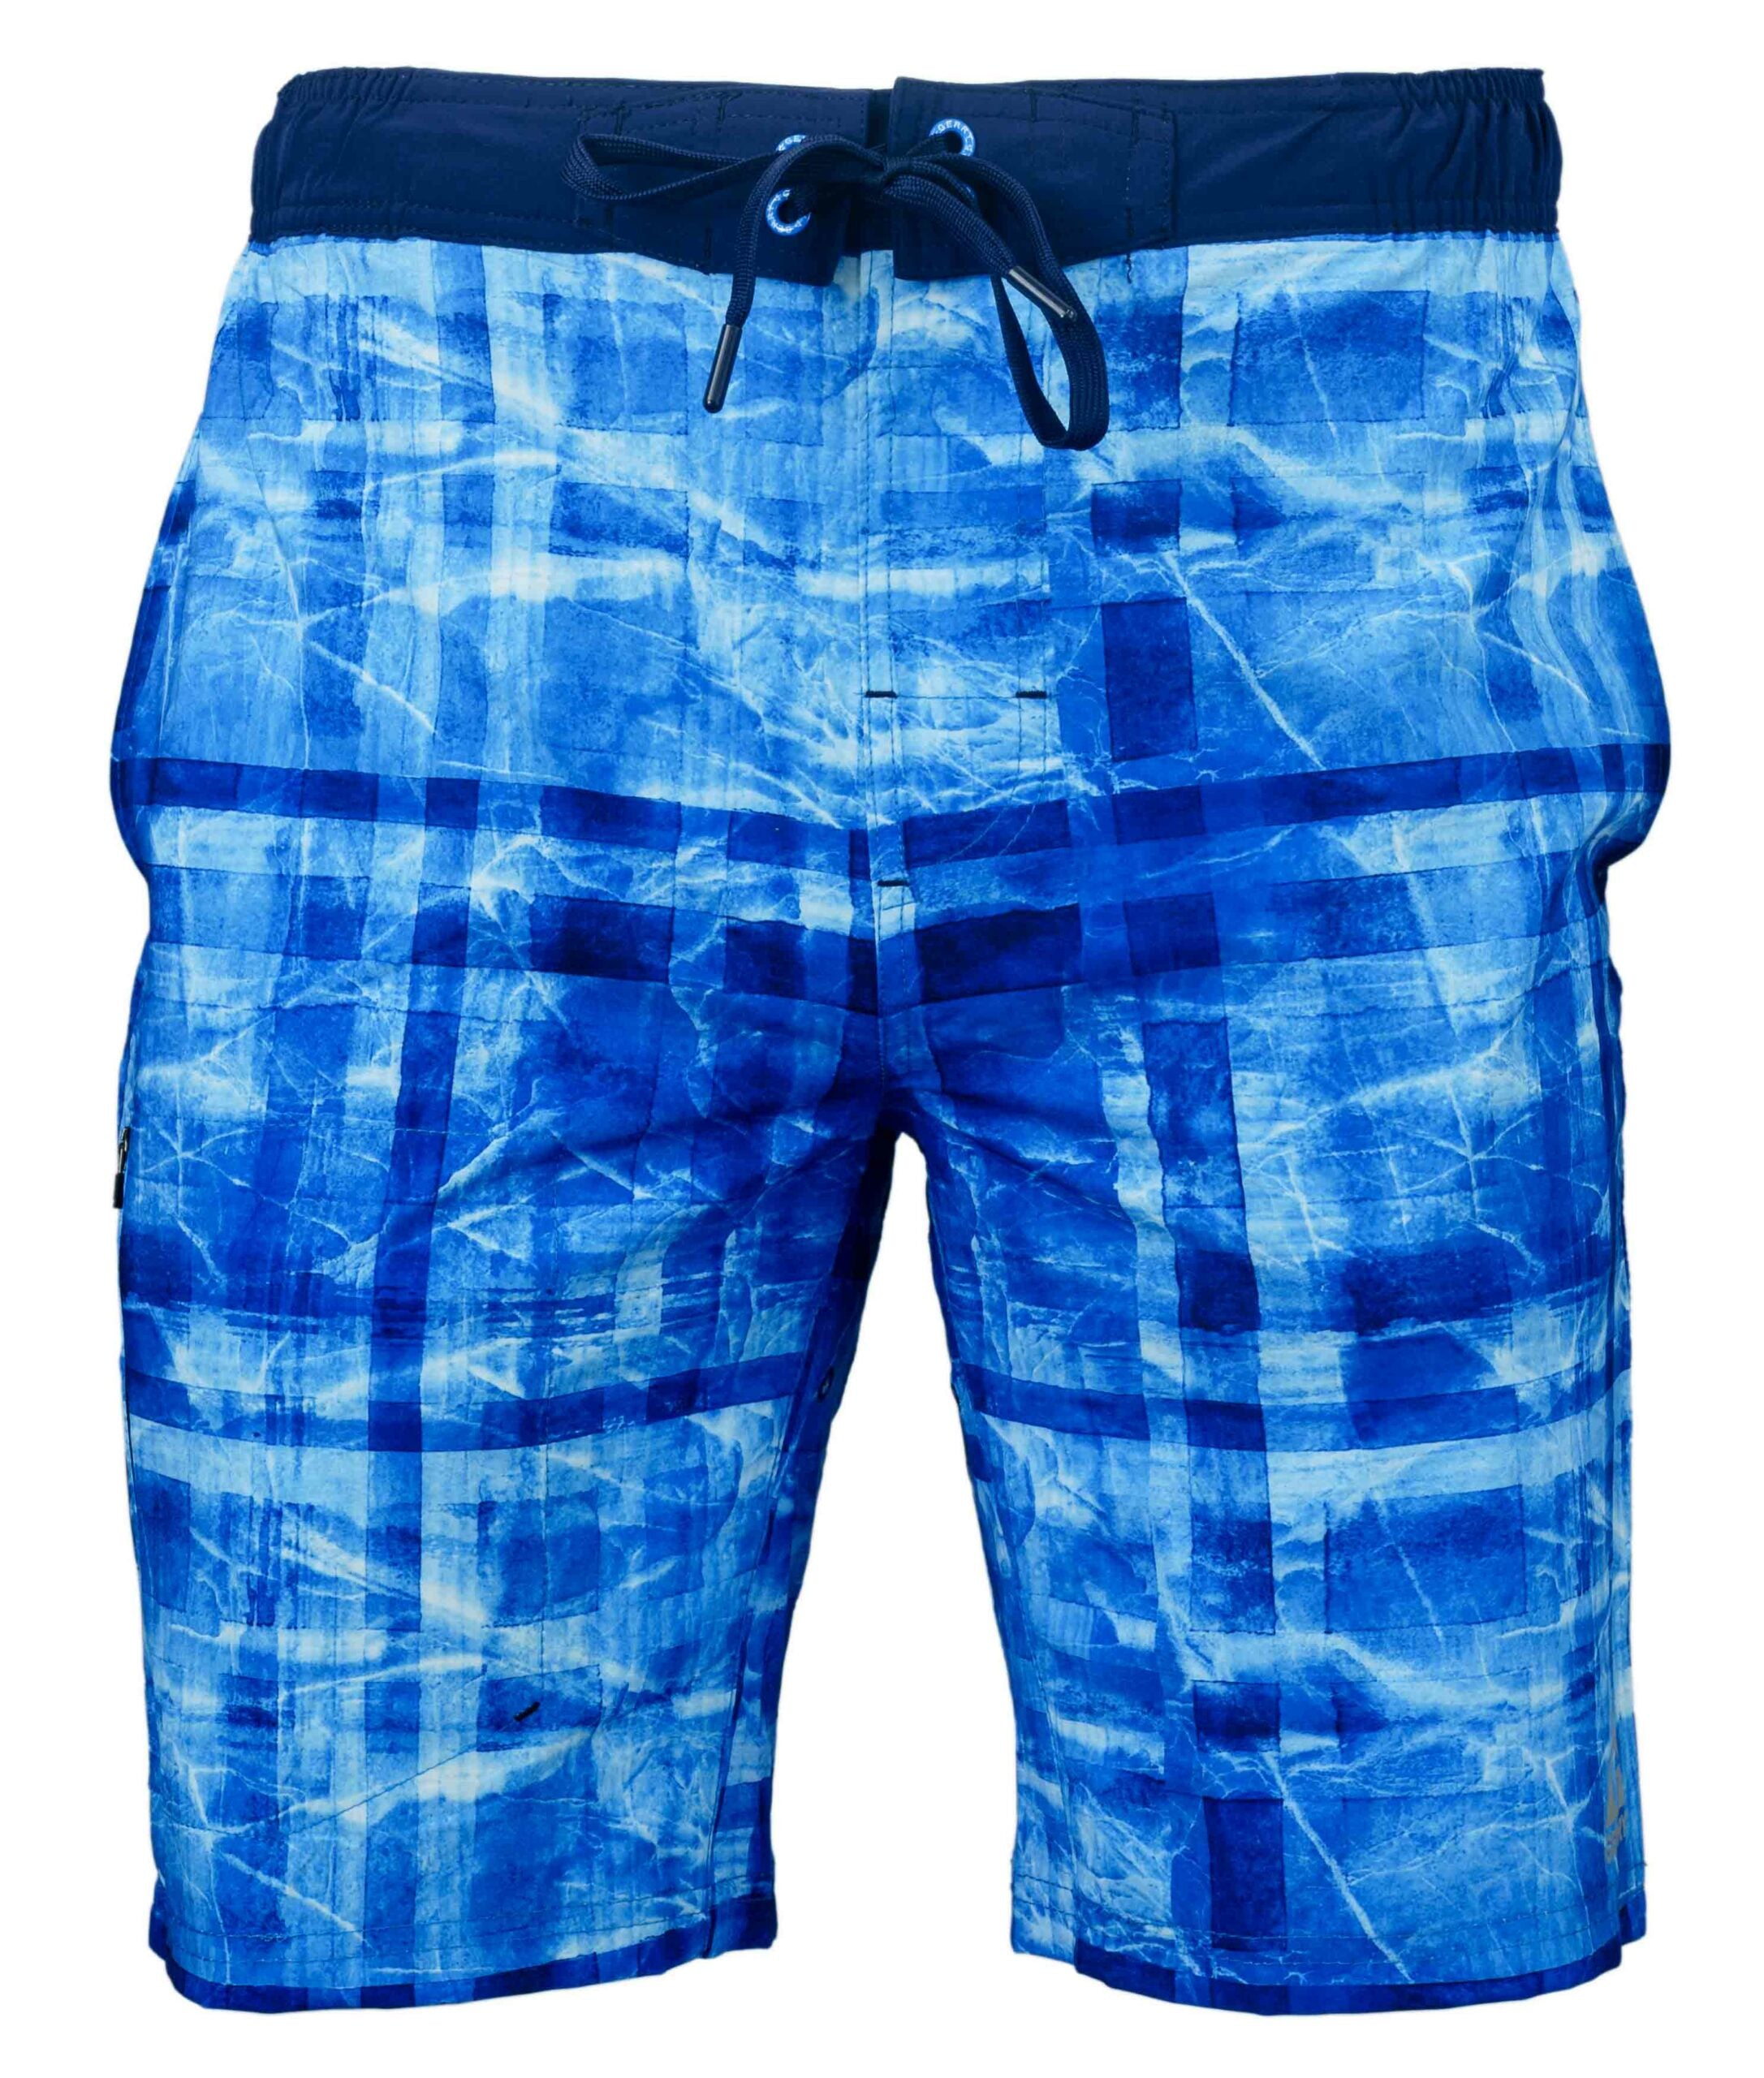 Ventures Gerry Mens Swim Trunks Board Shorts Bathing Suit 50 UPF (Blue Rigg, M)